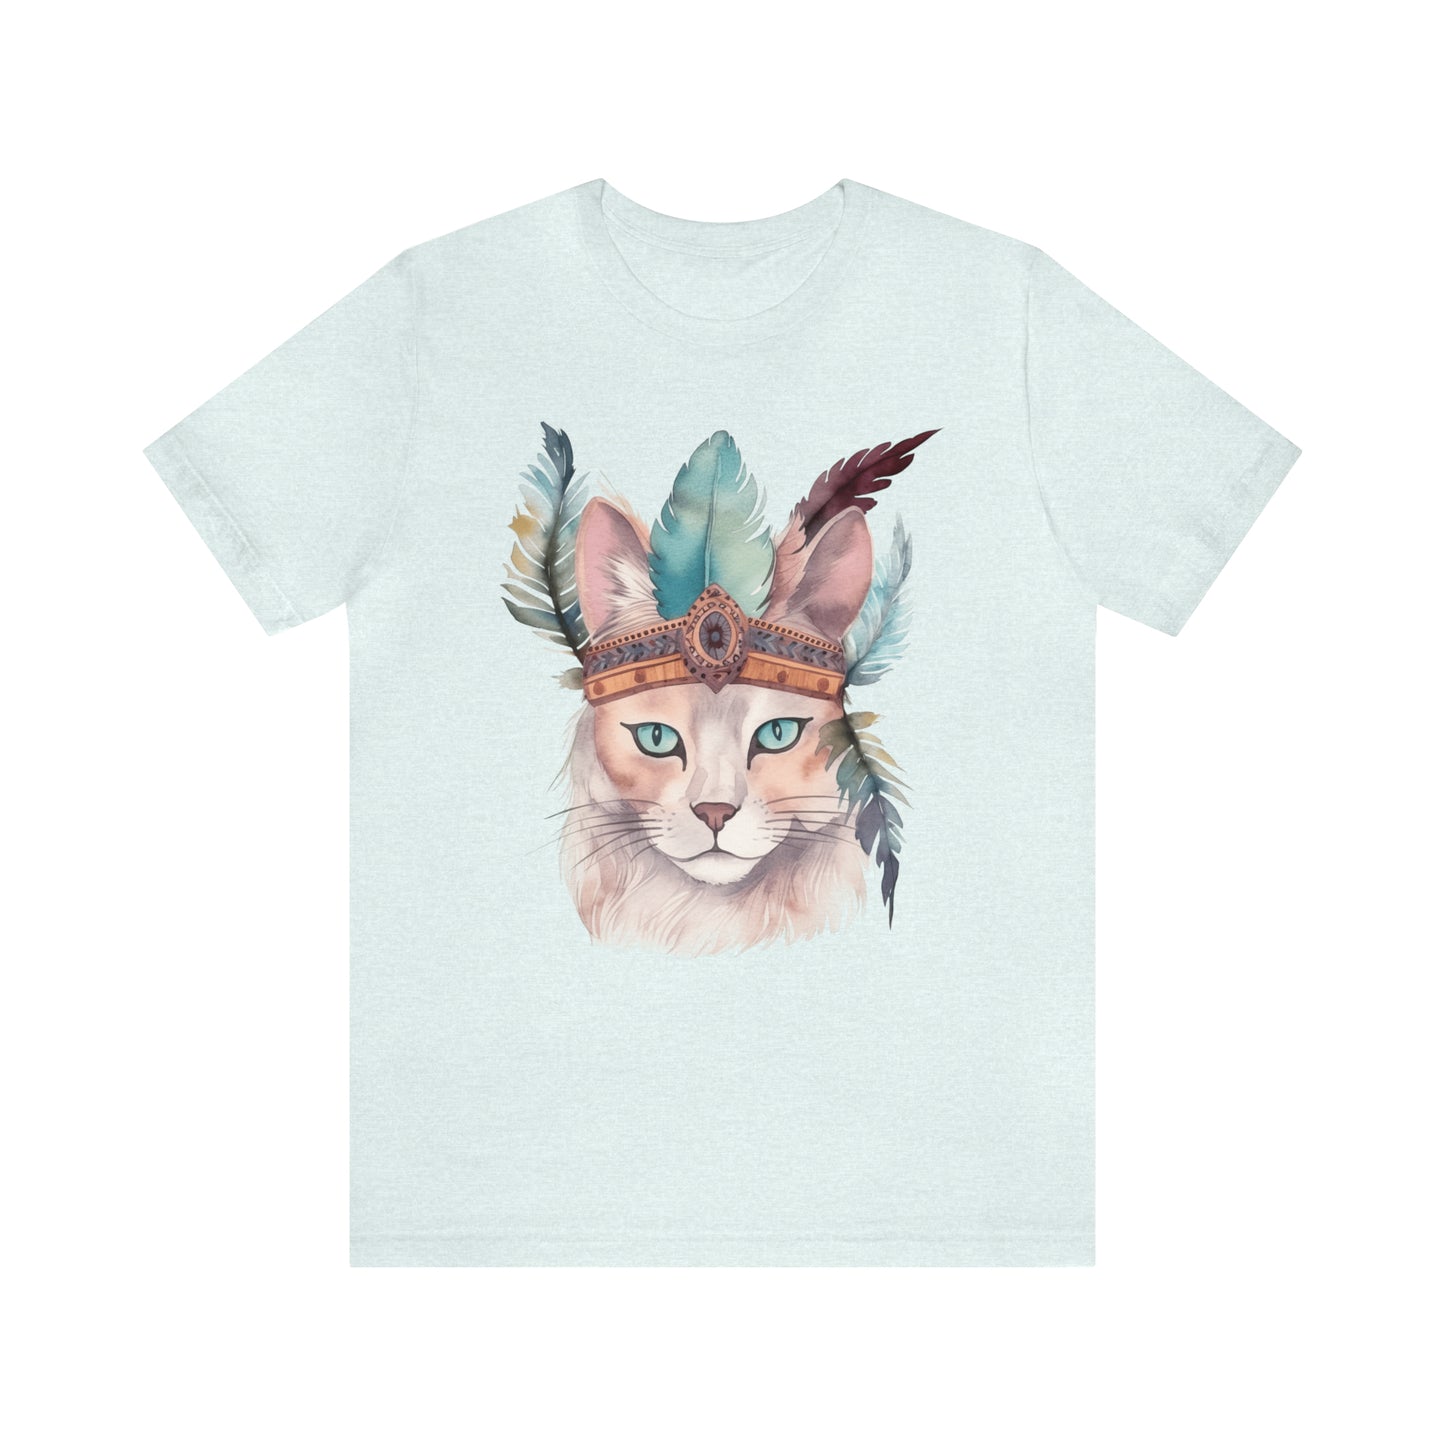 Cat Native Indian American Shirt, cat Indigenous Designed t shirt, Cute cat tee shirt, Native American Art tee, cool cat tee, cat lover gift